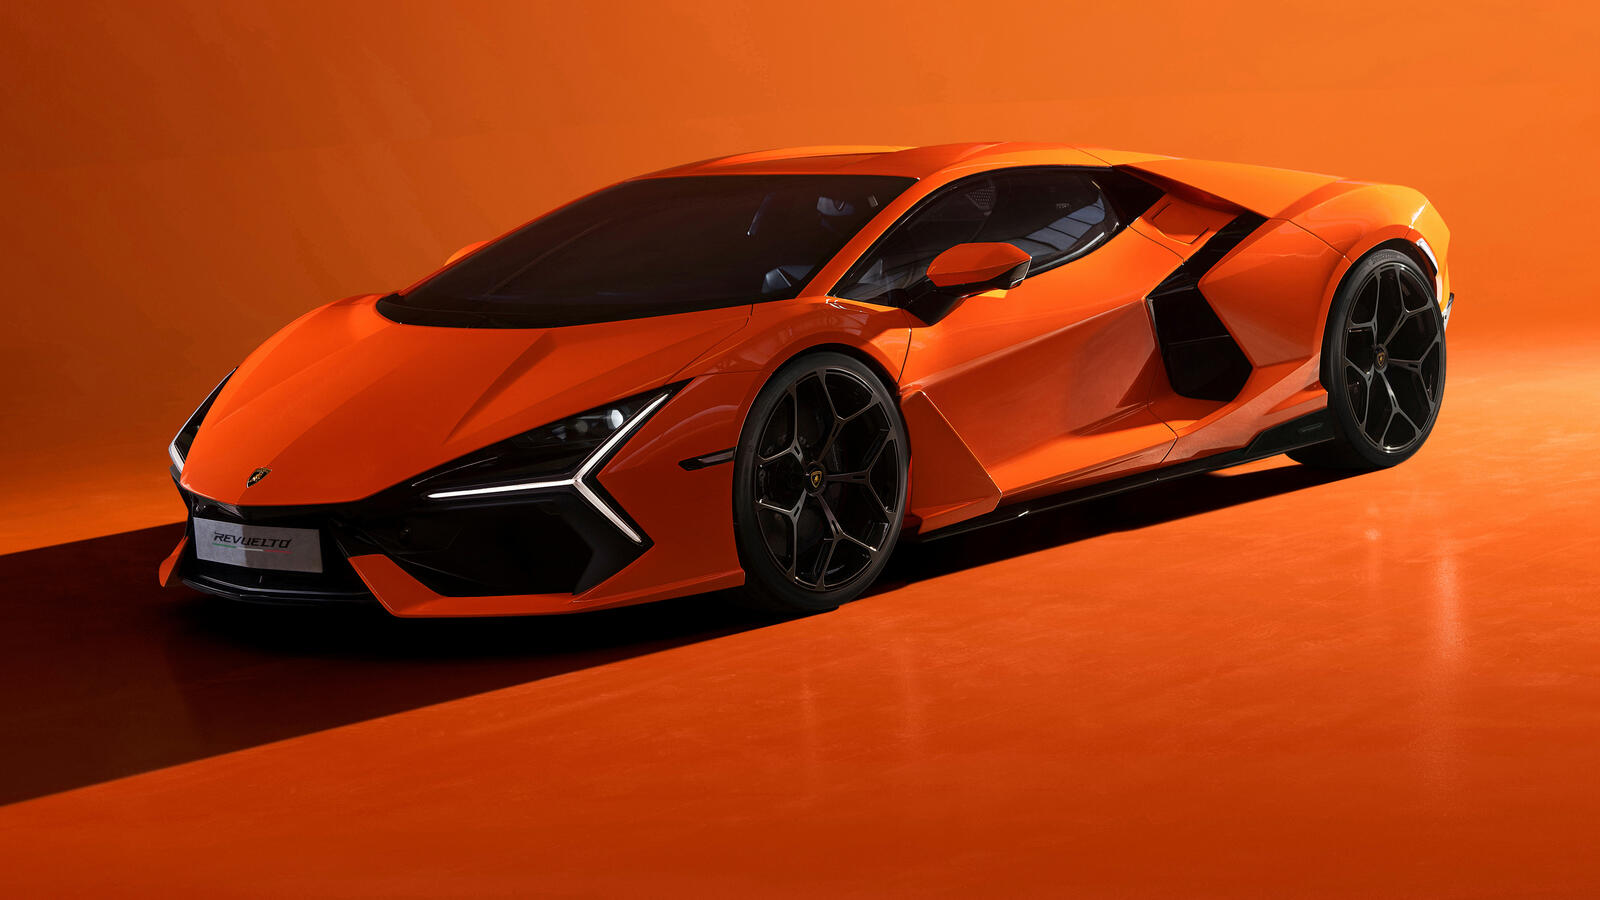 Free photo Lamborghini Revuelto of the year in orange on an orange background